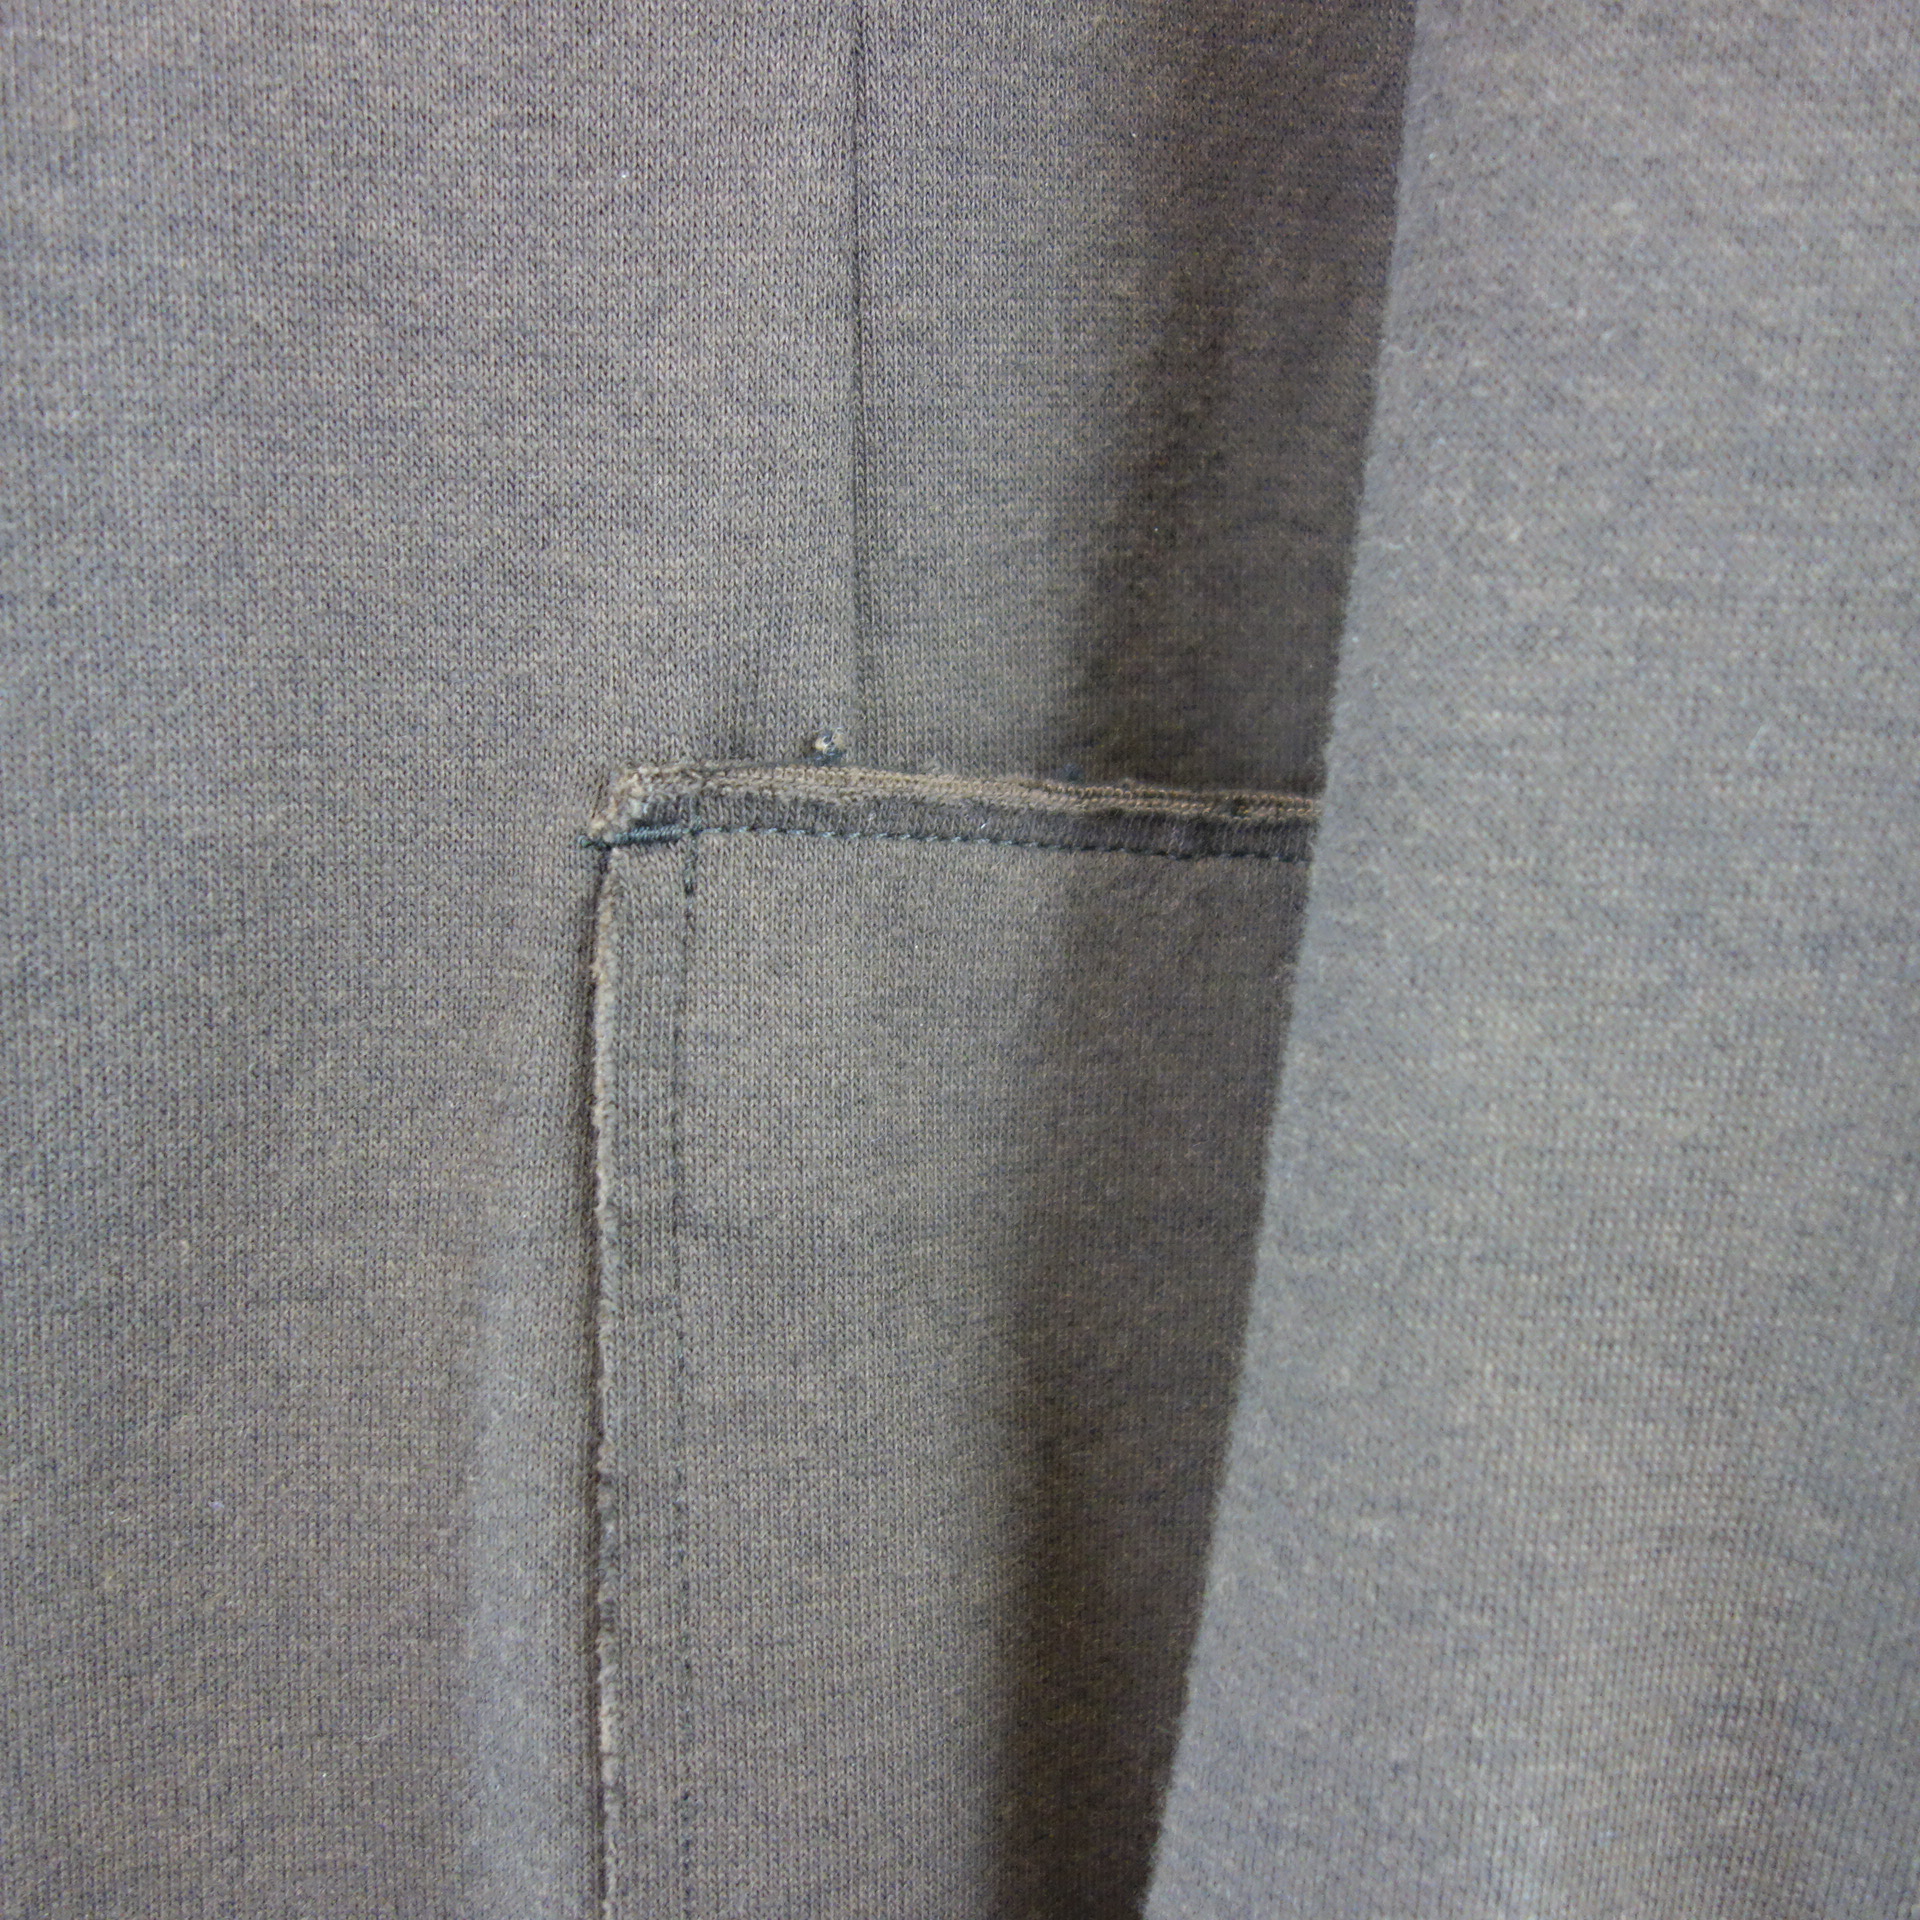 CIRCLE OF GENTLEMEN Herren Jersey Jacke Sakko Style Sweat Braun Harry Slim Fit